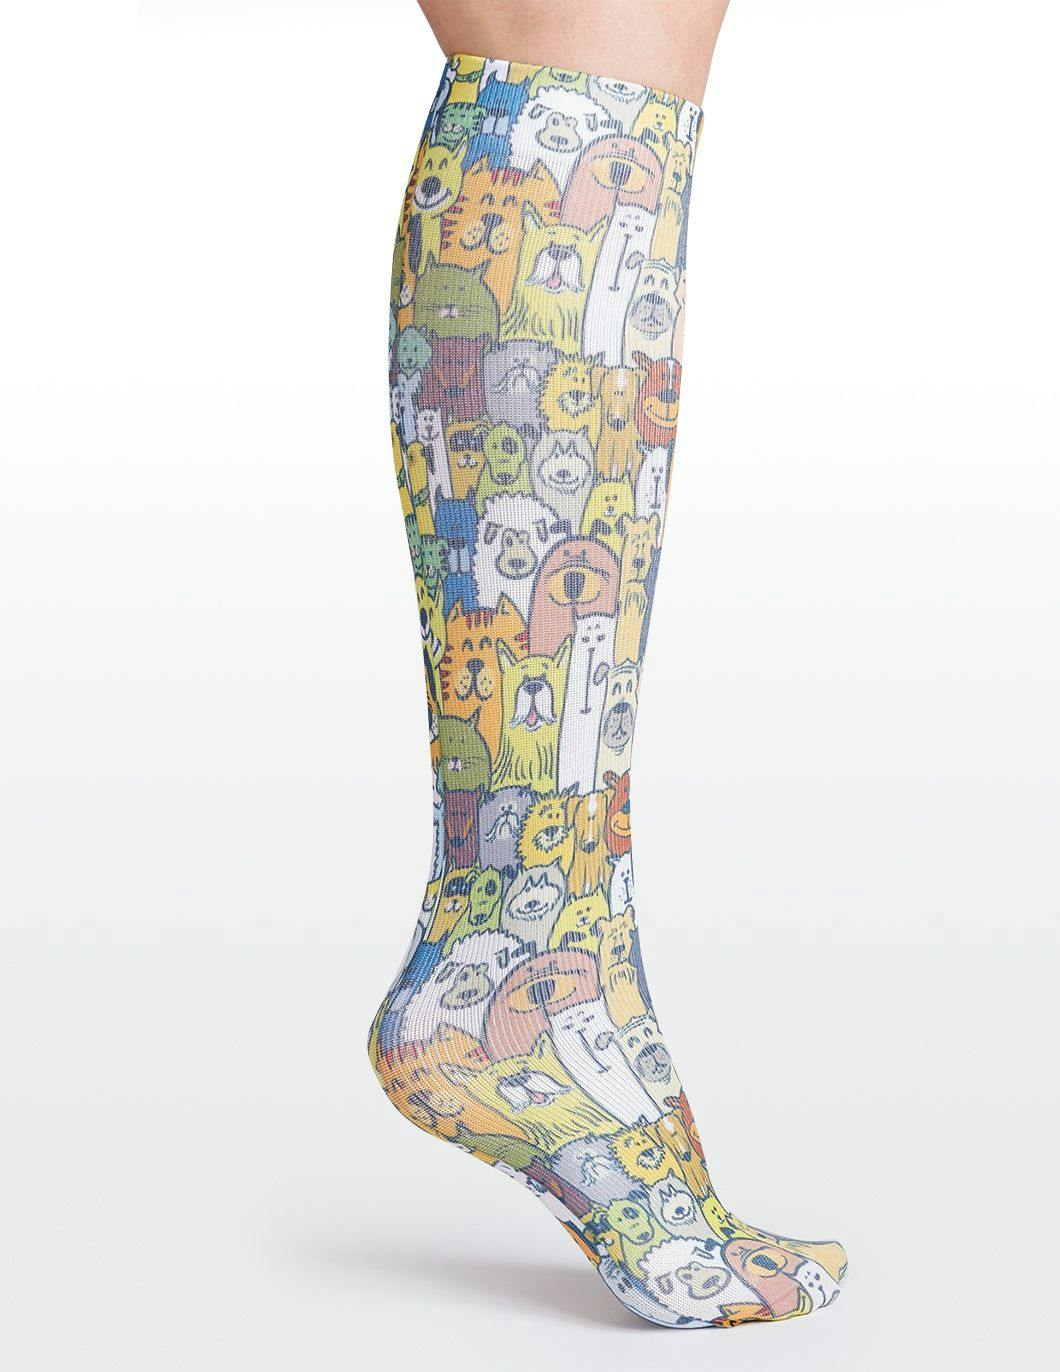 cutieful-compression-socks-dapper-dogs-print